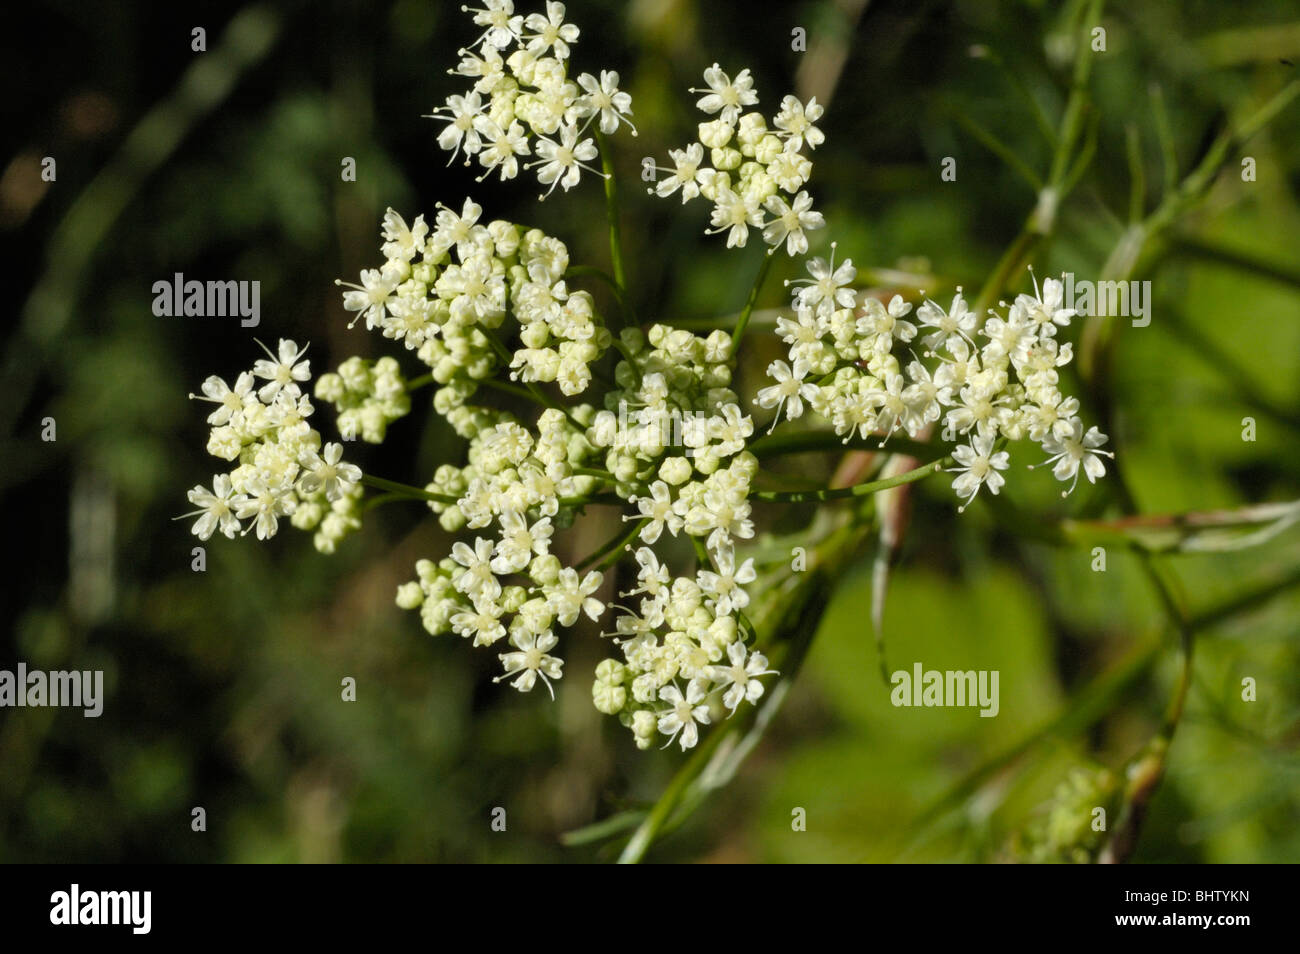 Burnet-saxifrage, pimpinella saxifraga Stock Photo